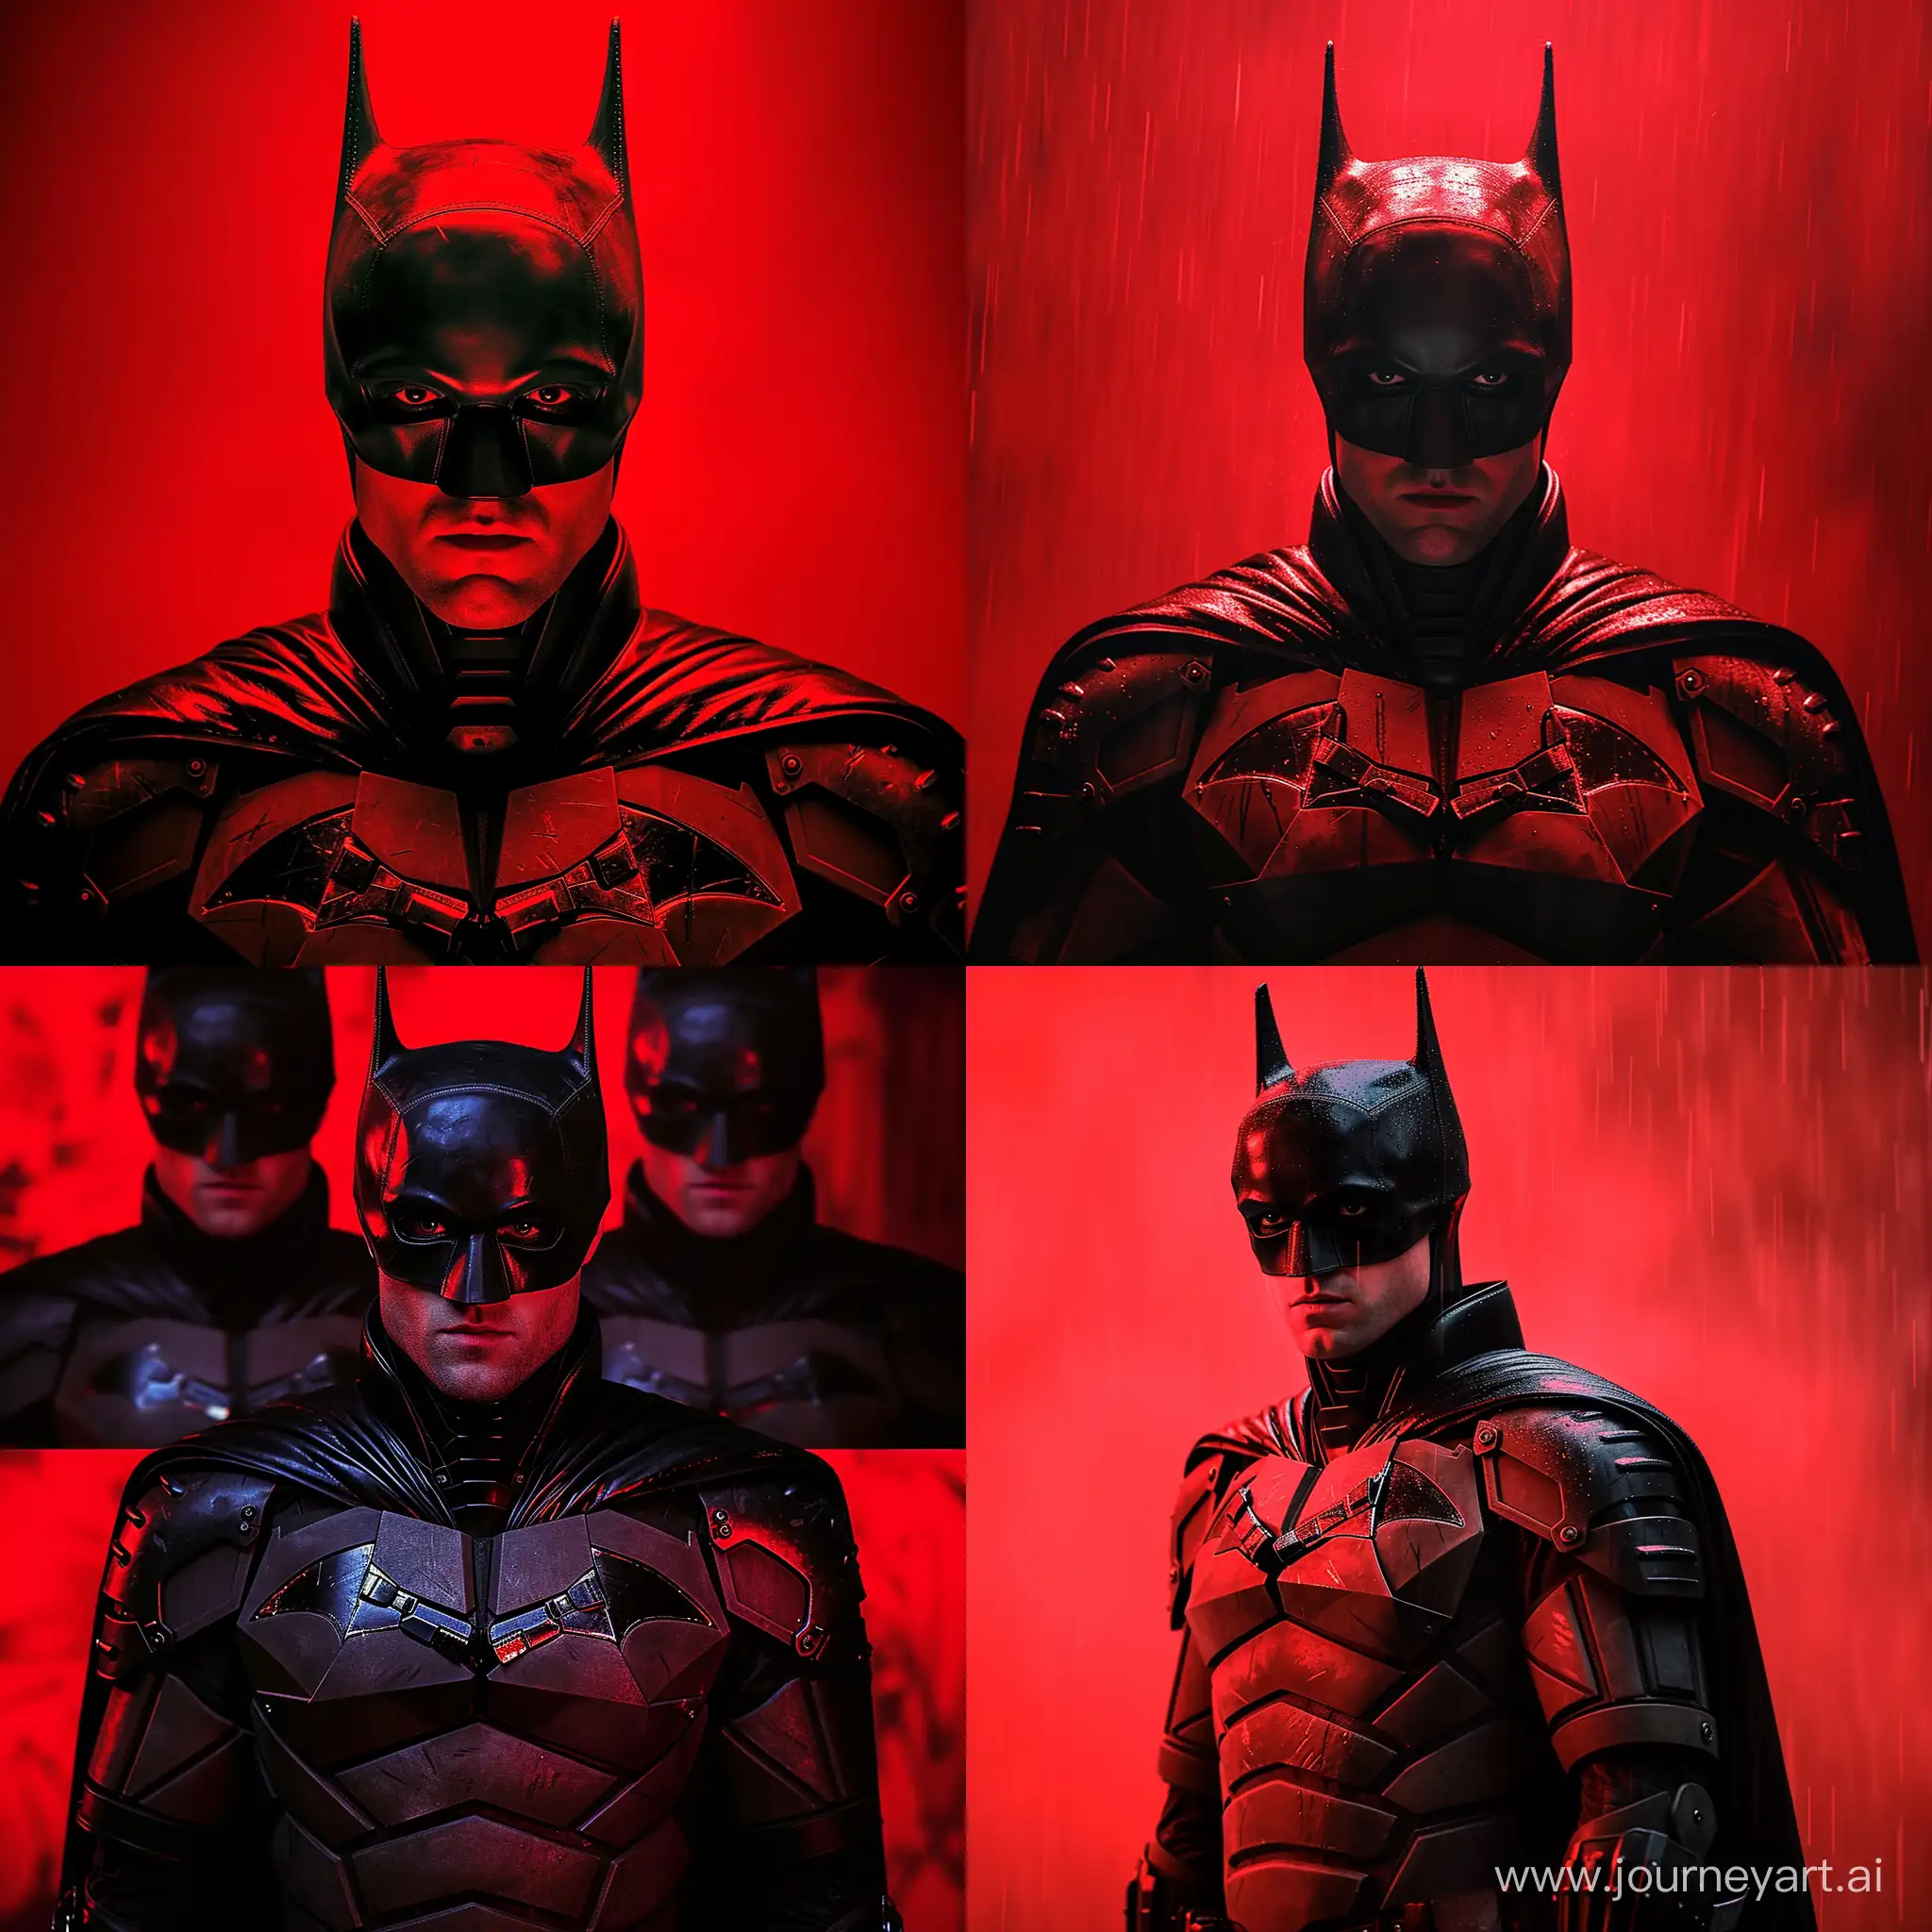 Robert Pattinson as Batman in Red 